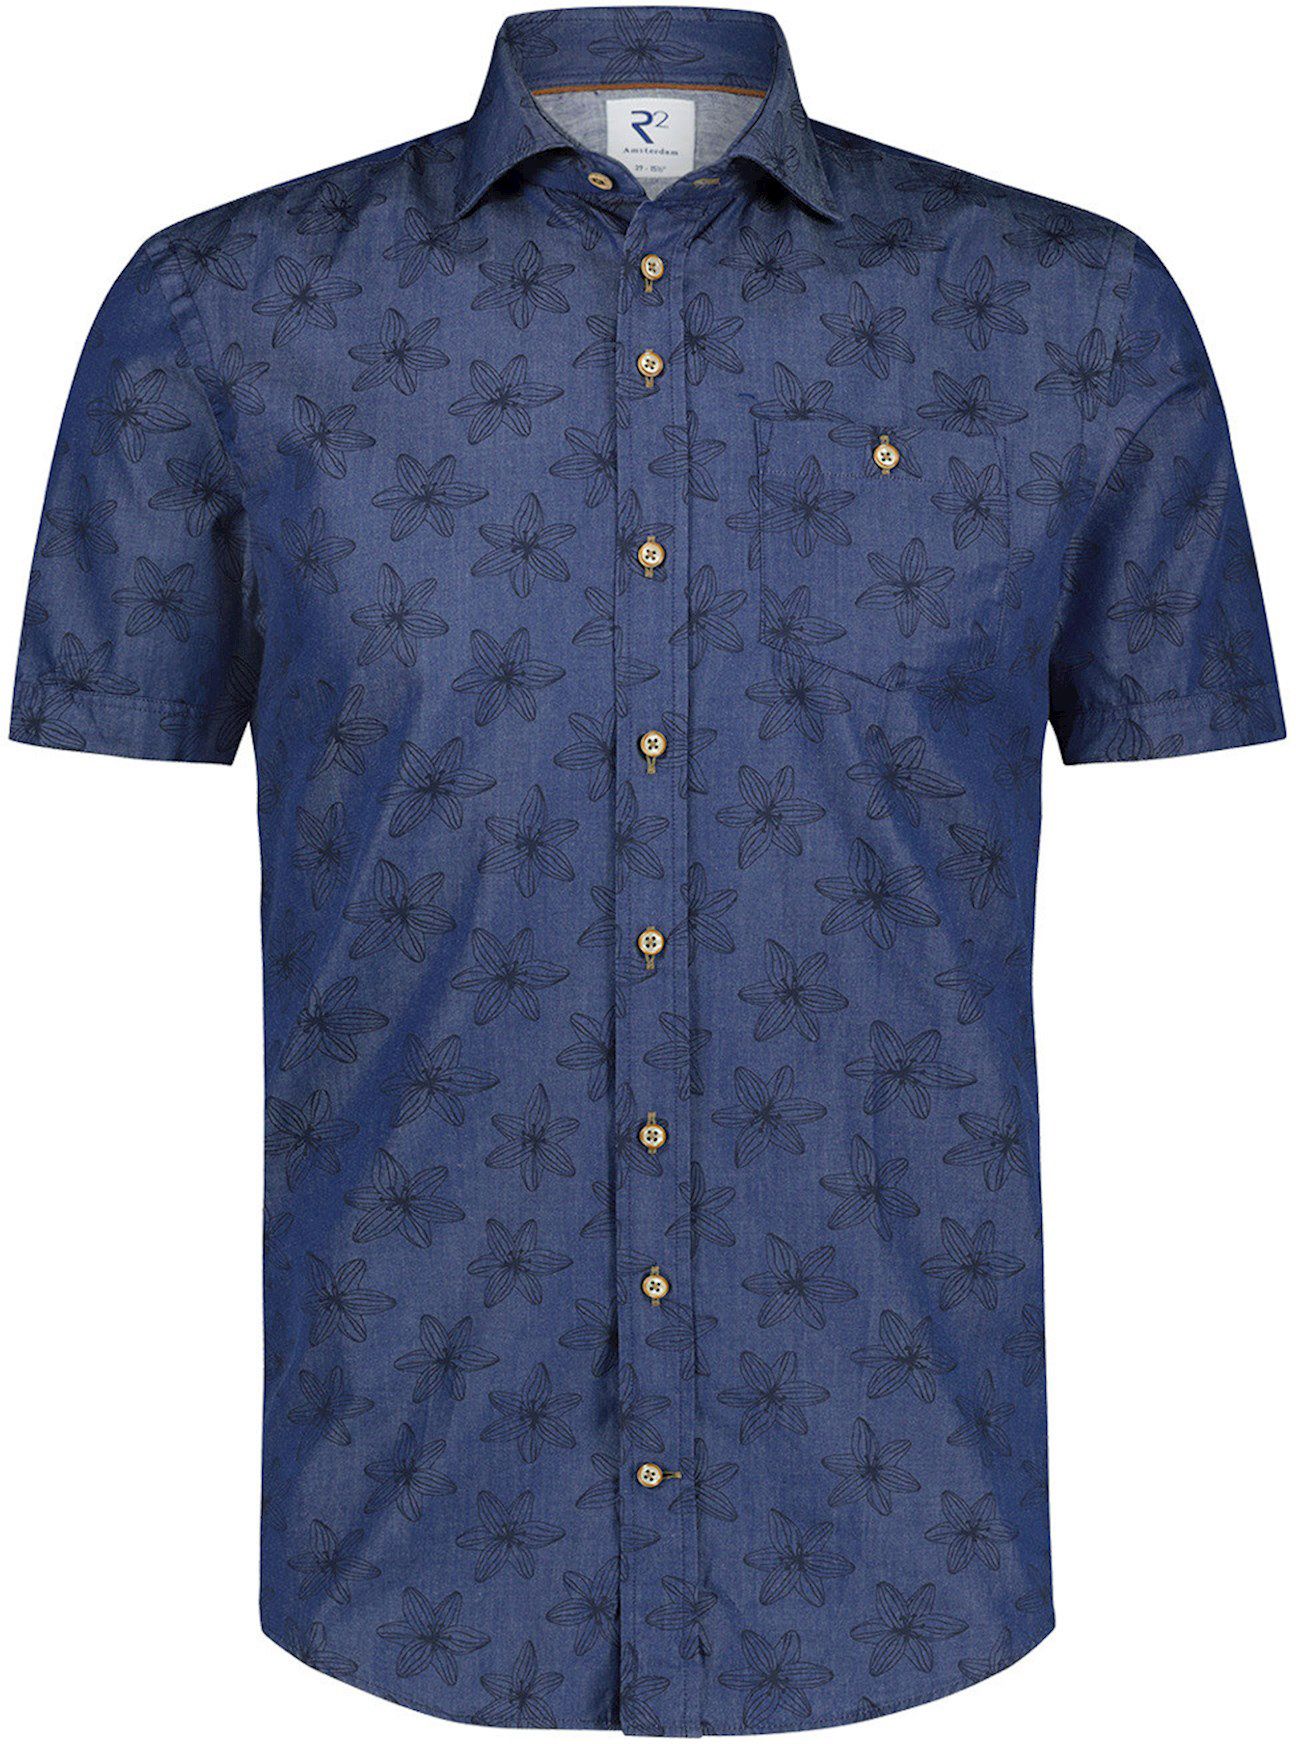 R2 Shirt Short Sleeves Floral Dark Blue Dark Blue size 16 1/2